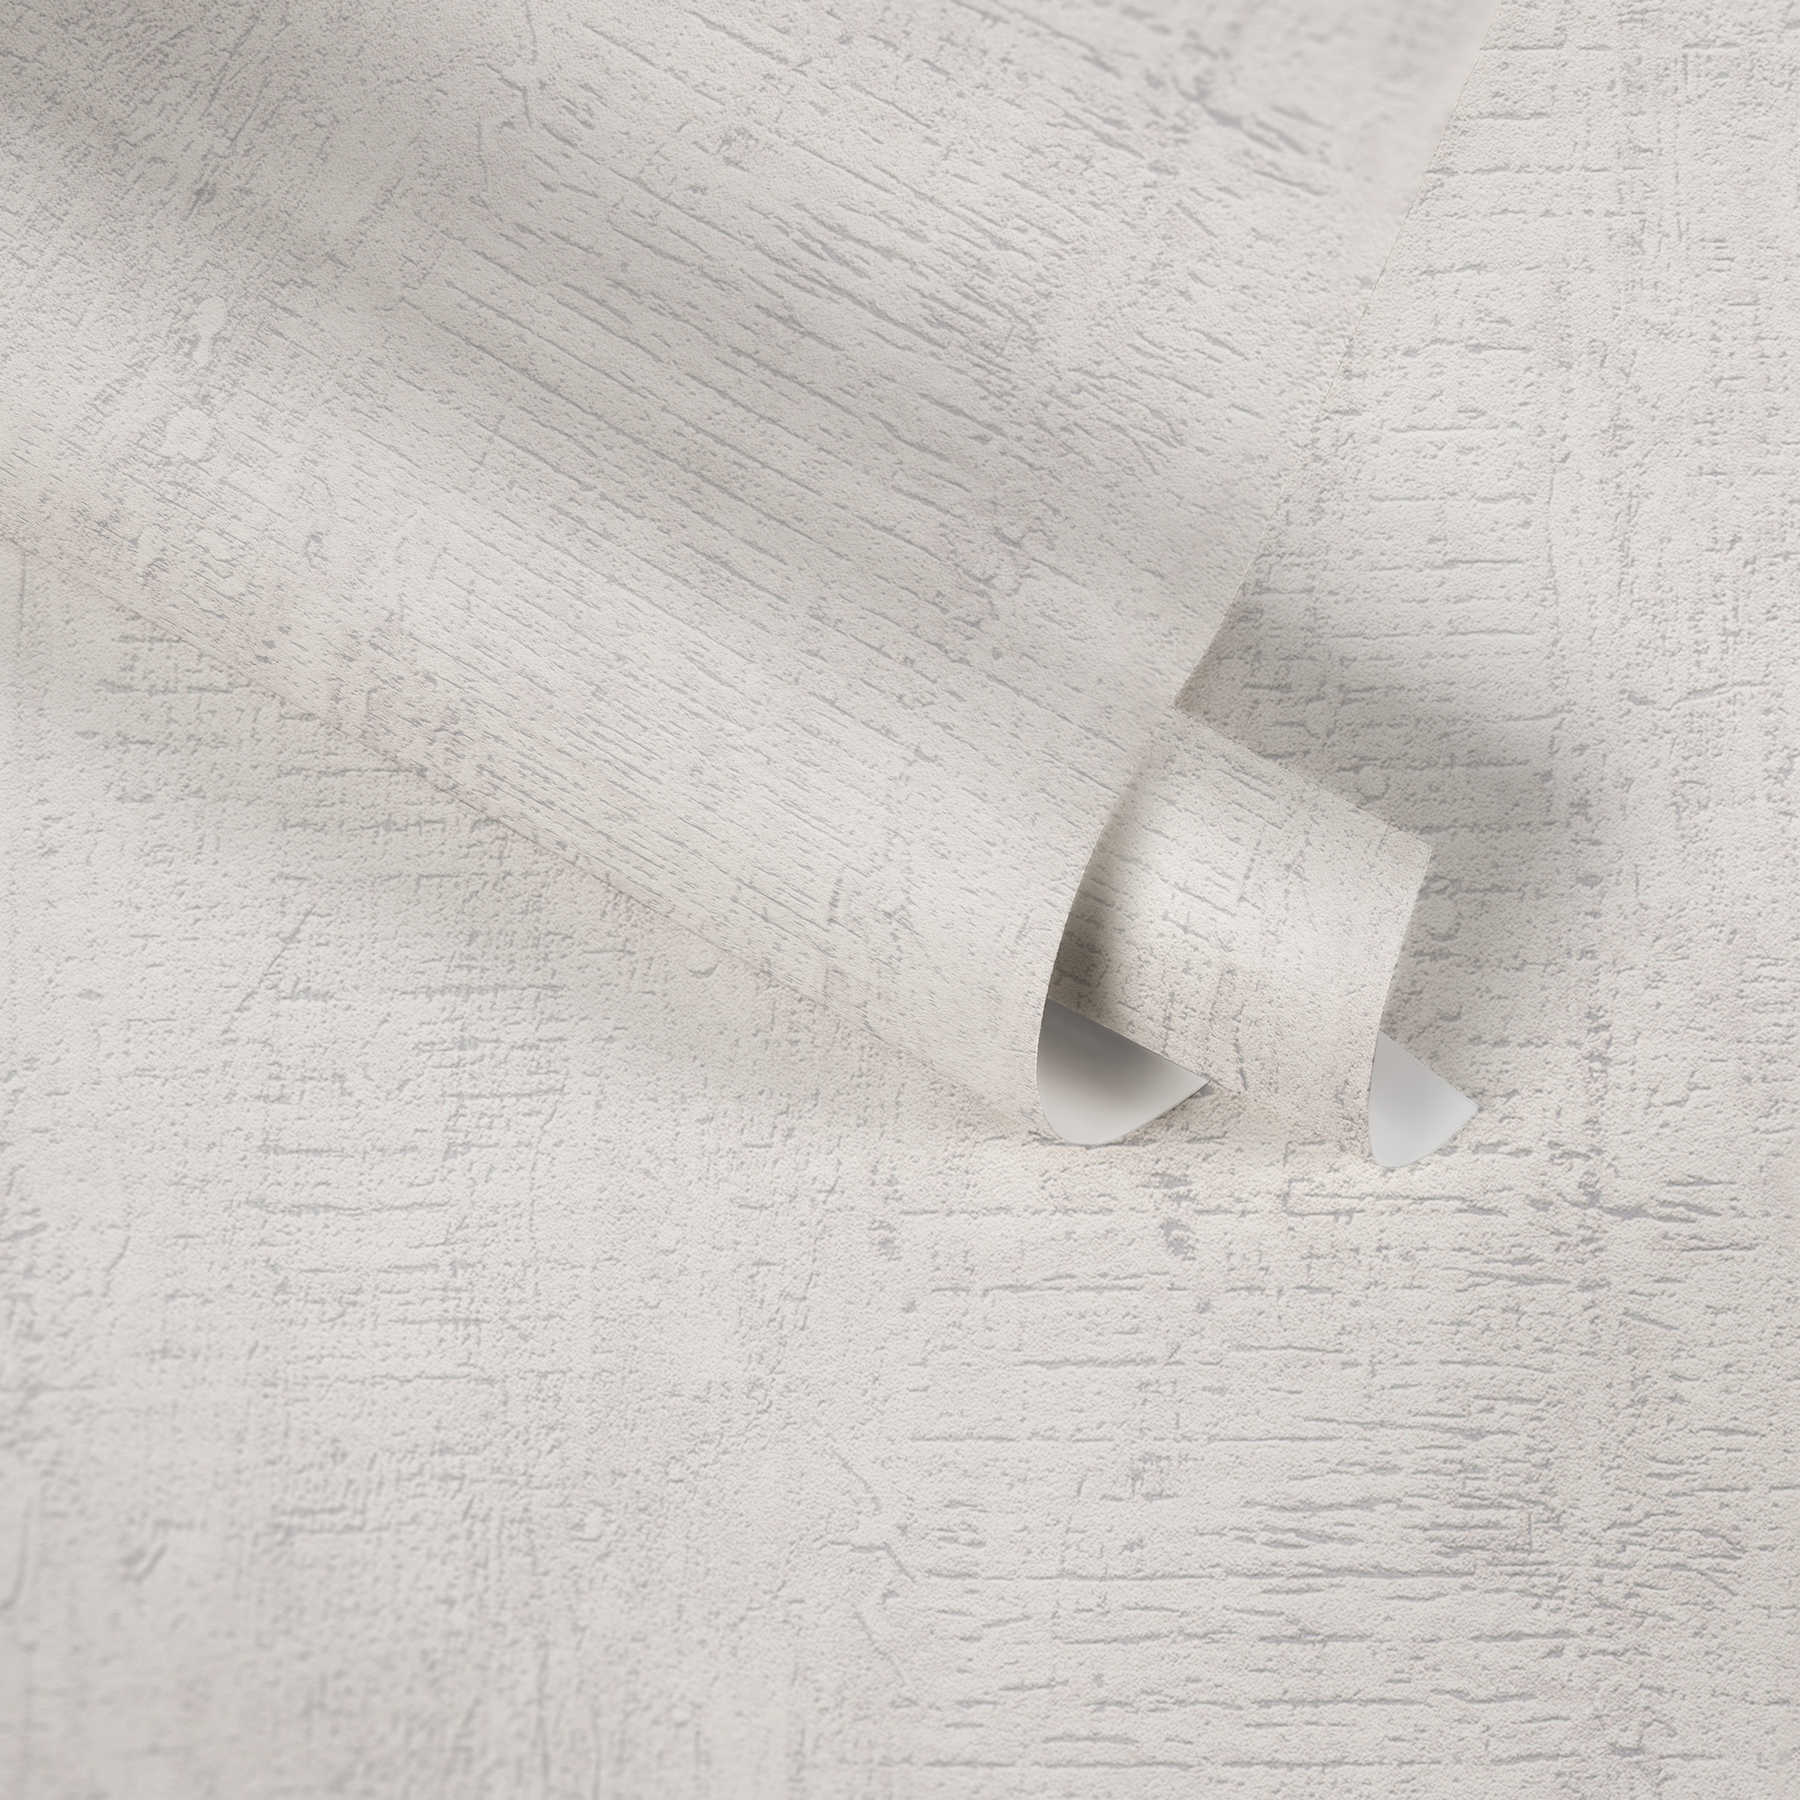             Tapete Betonoptik mit rustikaler Struktur mit rauem Muster – Weiß
        